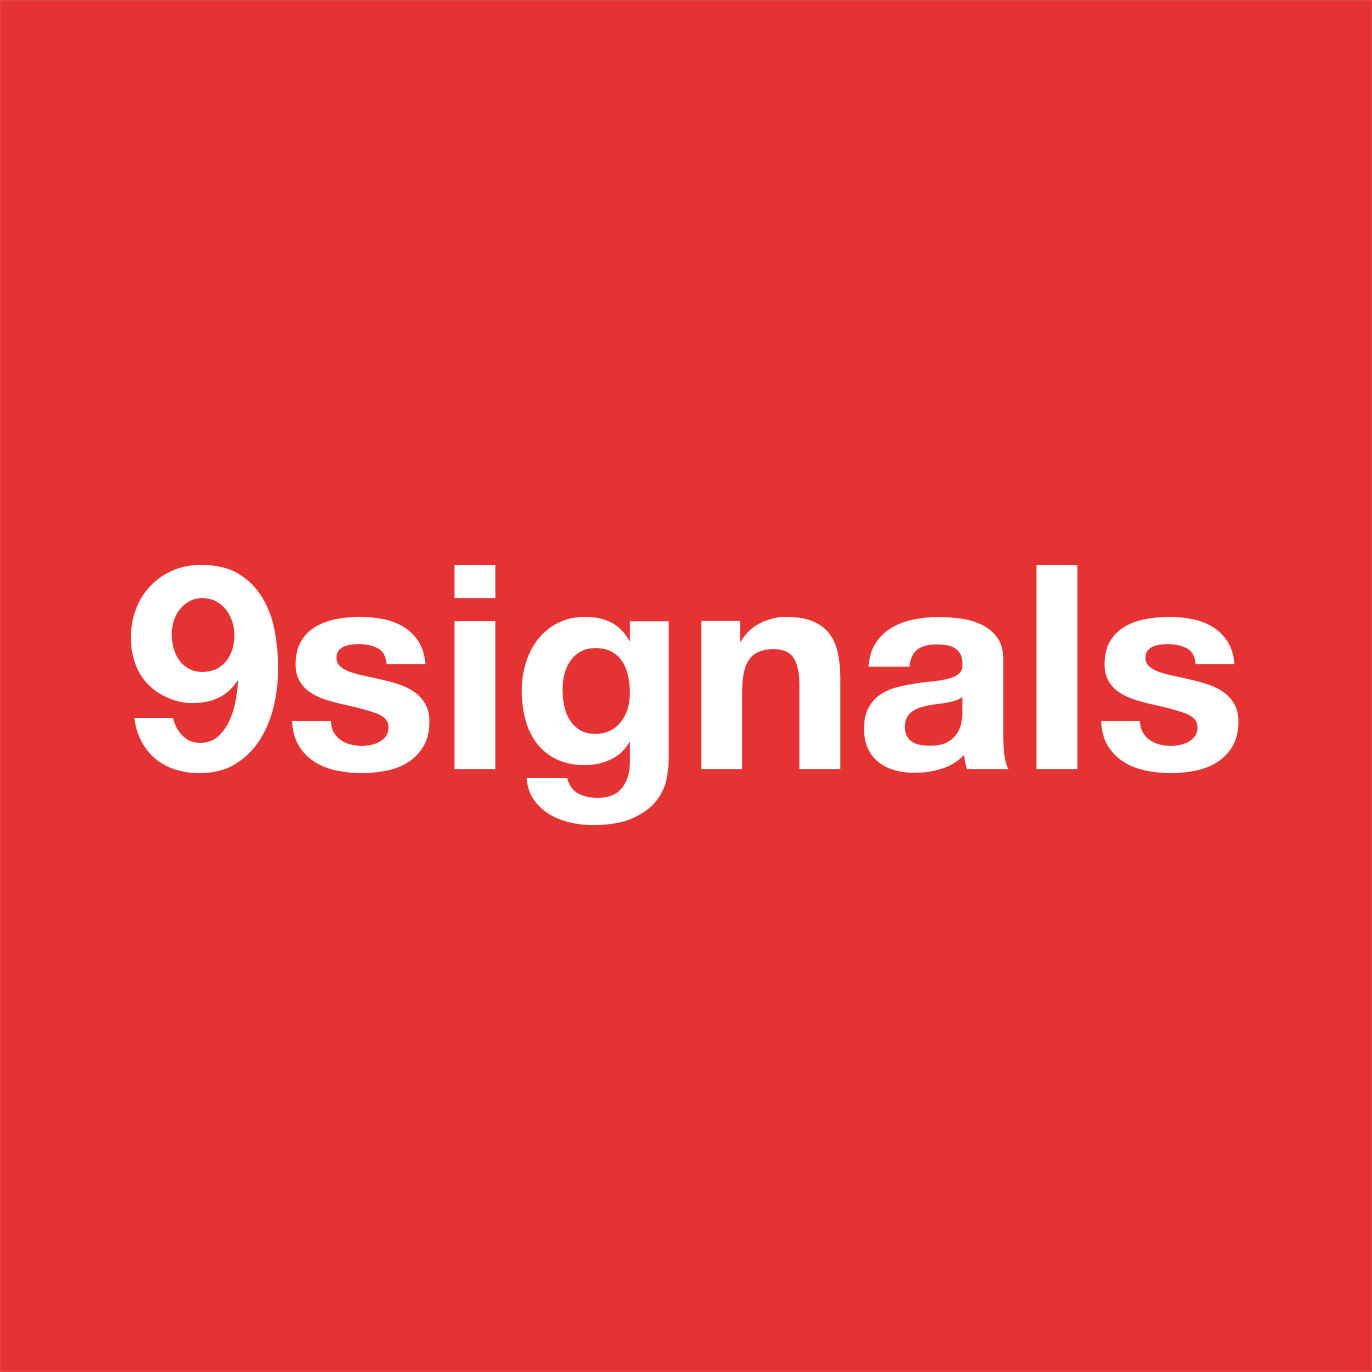 9signals | IT History Society